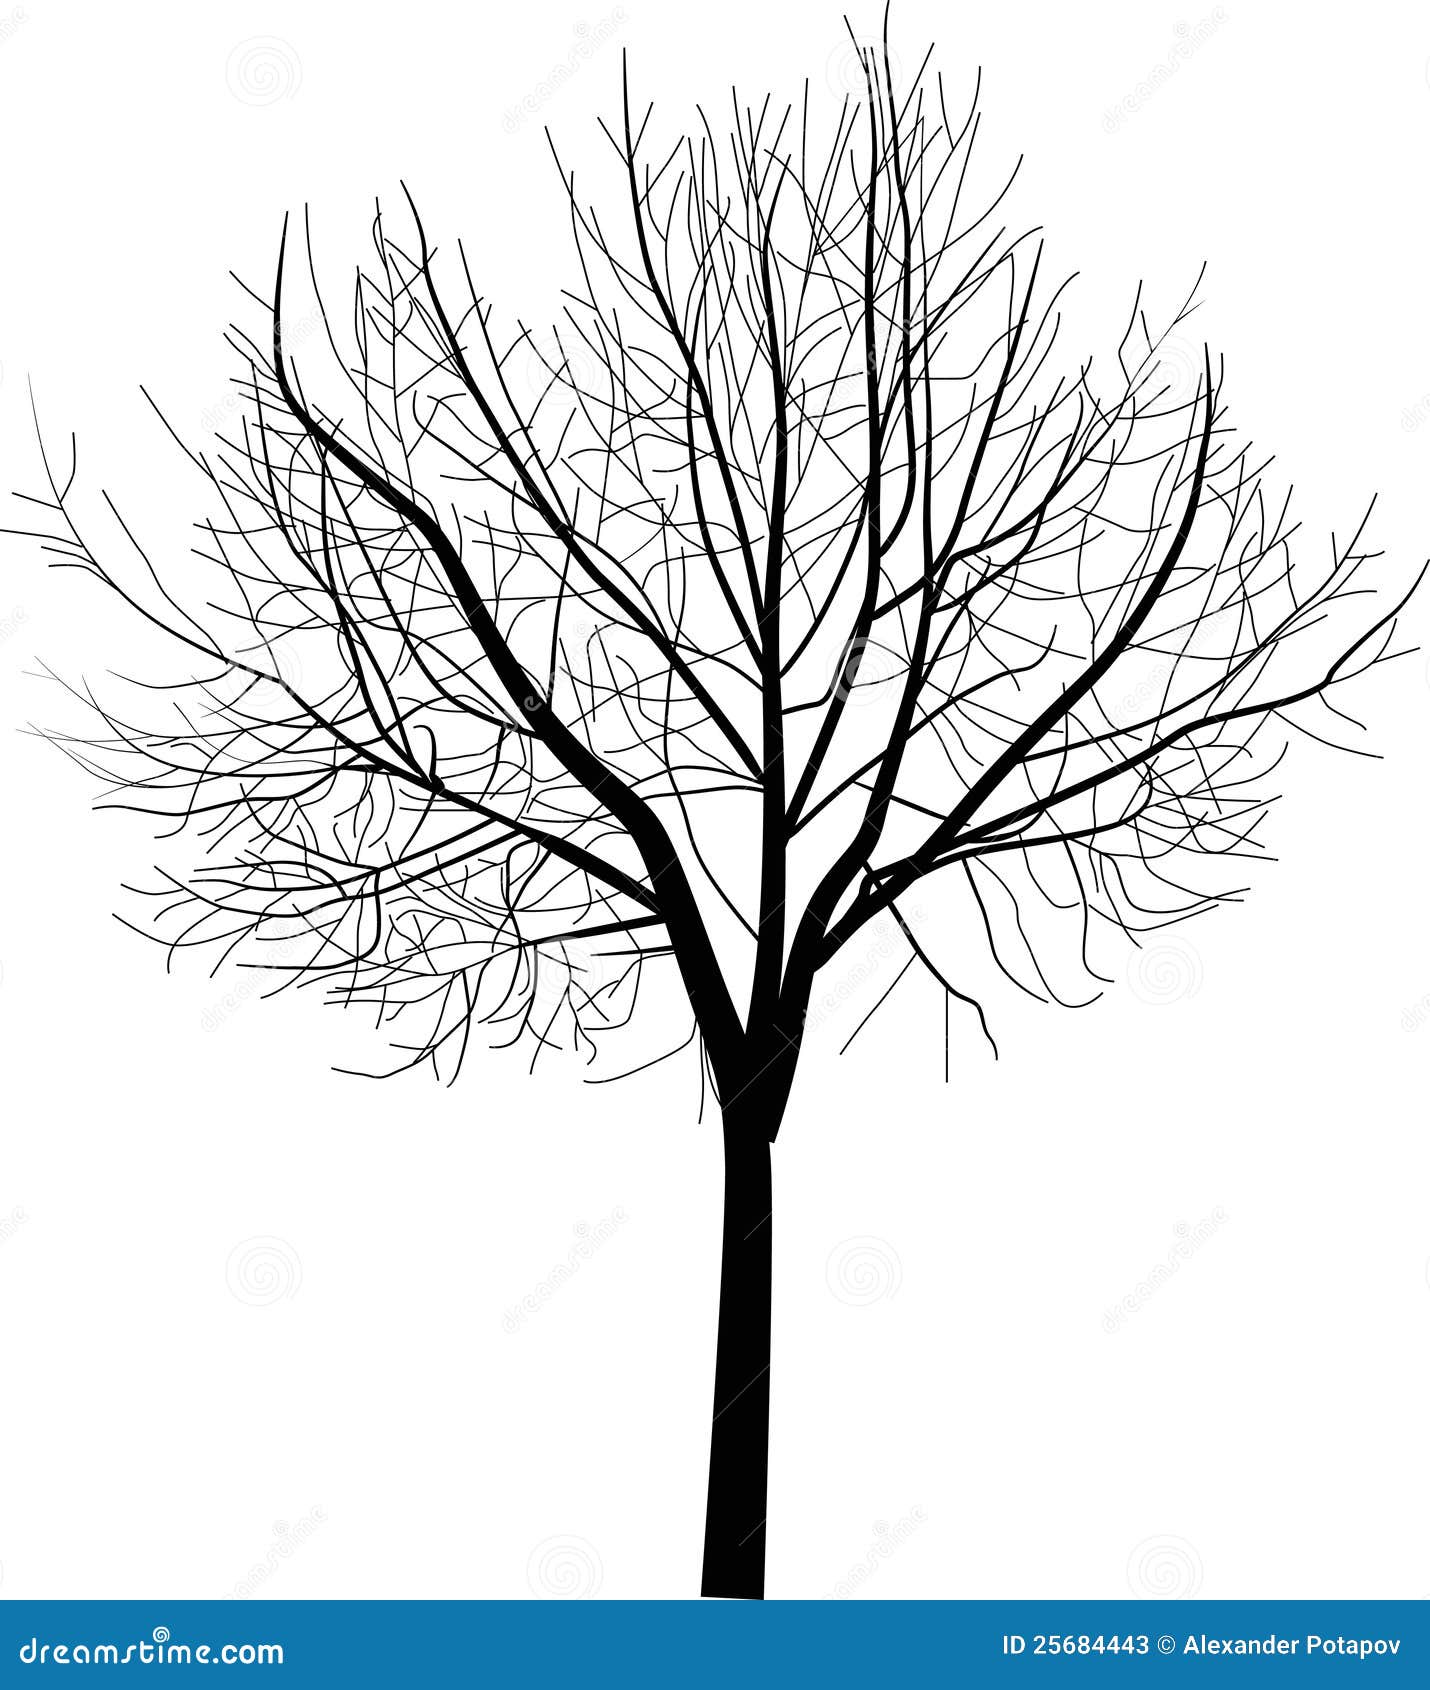 tree diagram clip art - photo #50